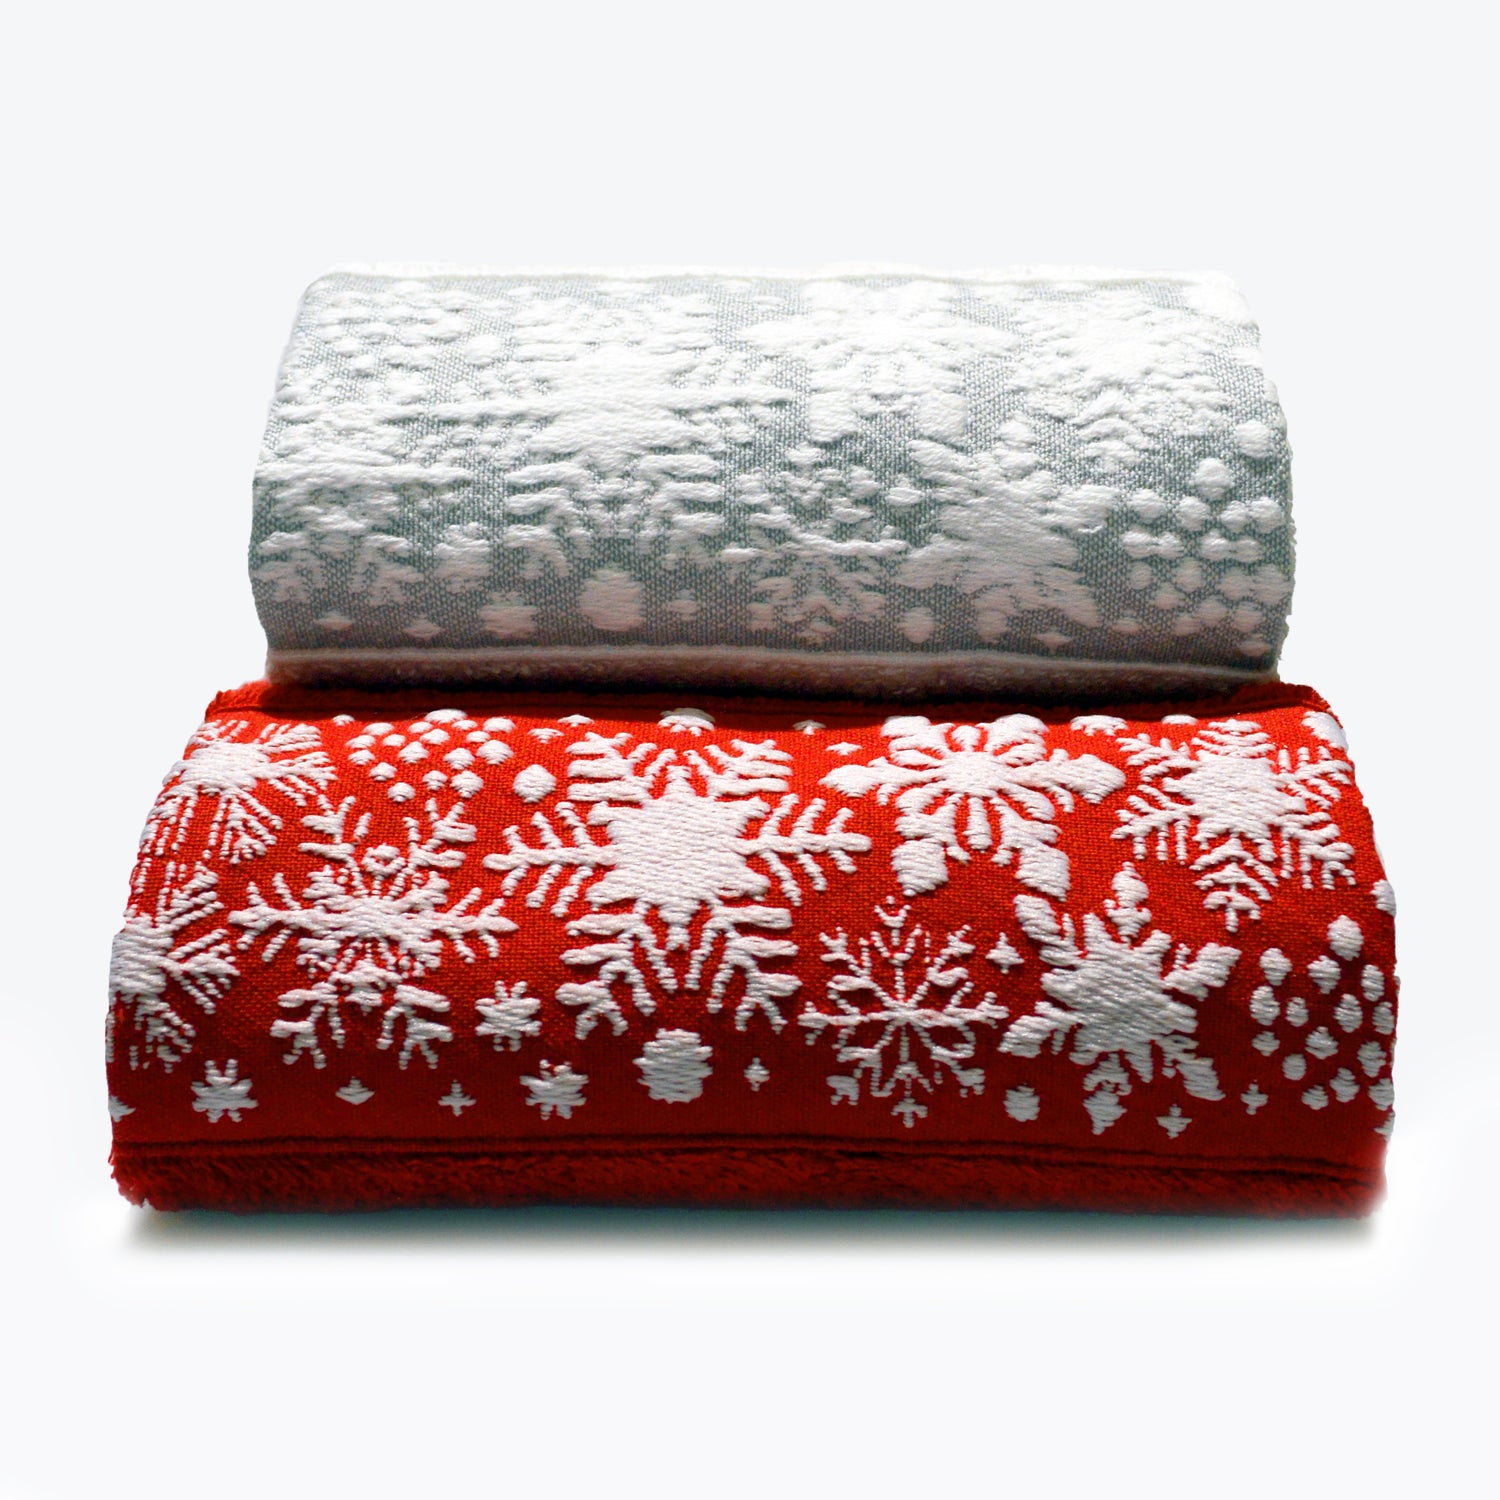 Snowflake Towels - Embroidered Christmas Towel Set